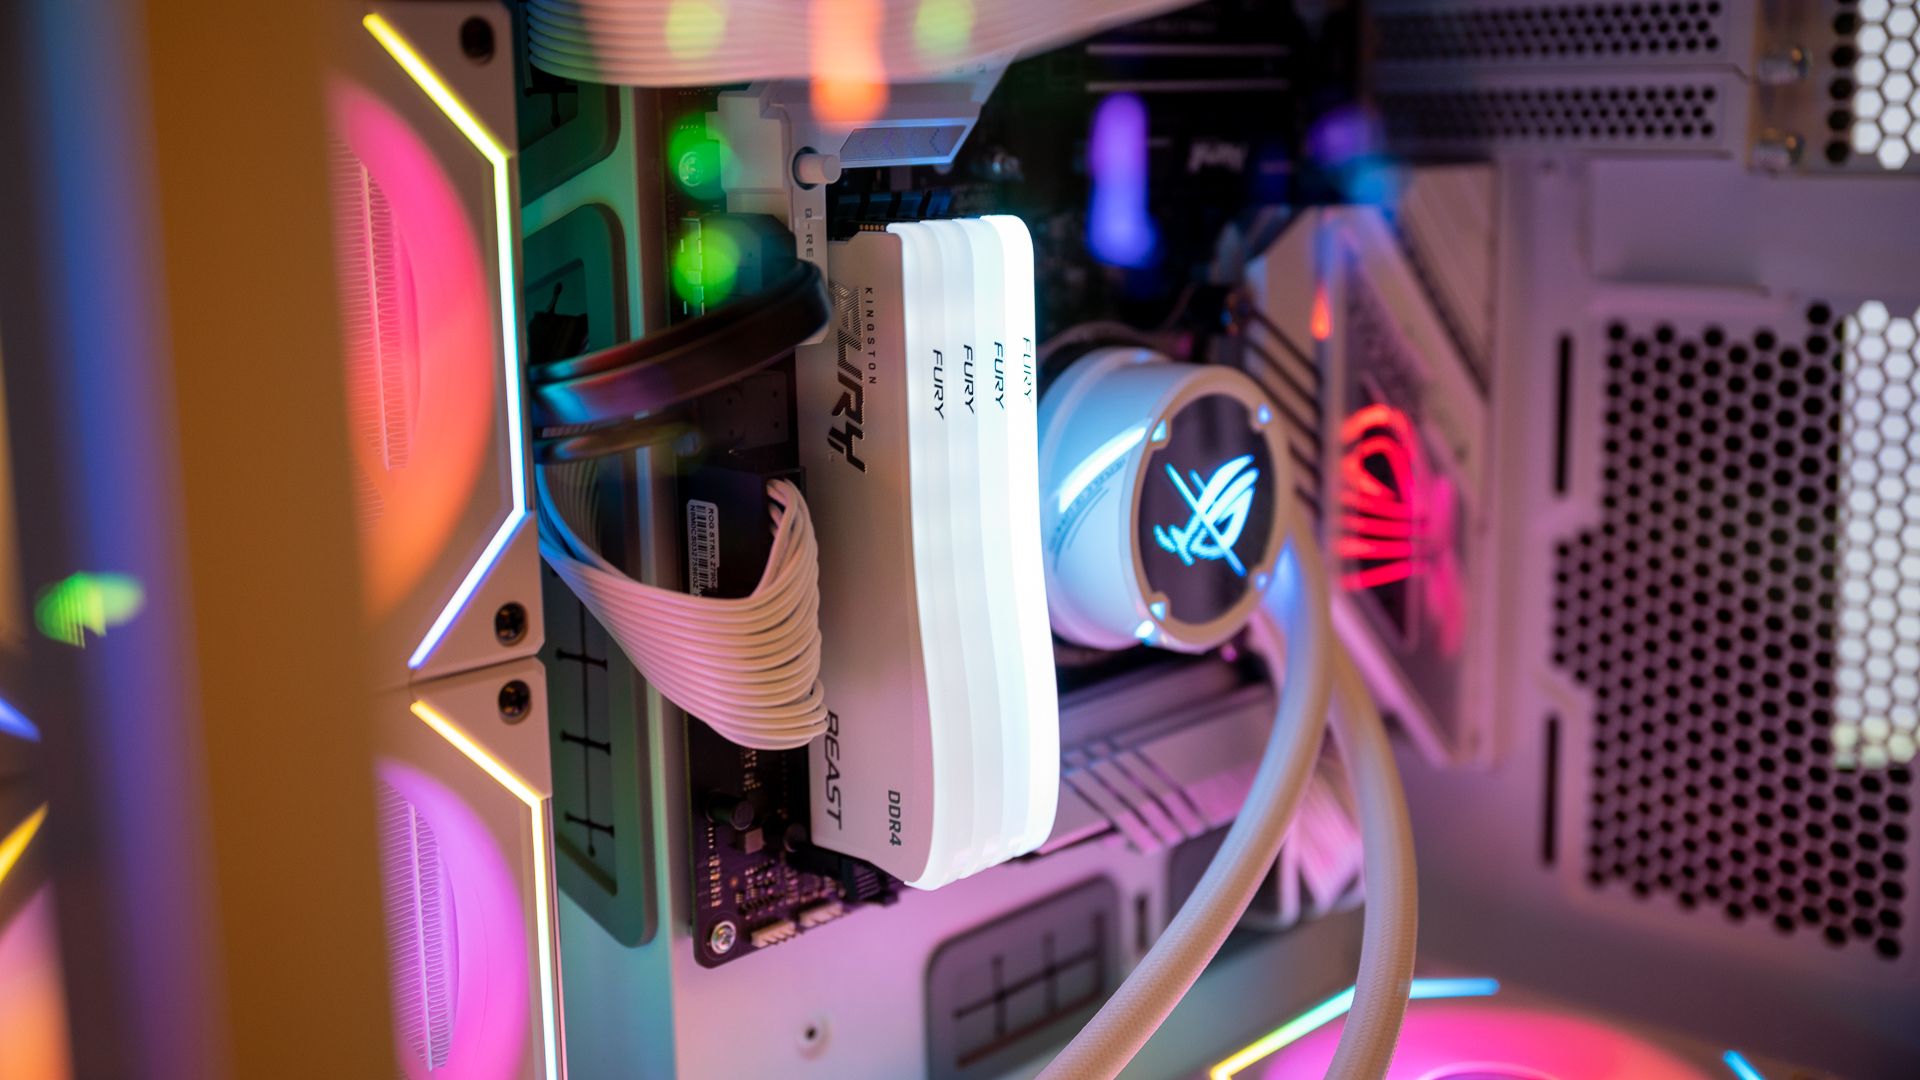 RAM in a regular desktop tower. 